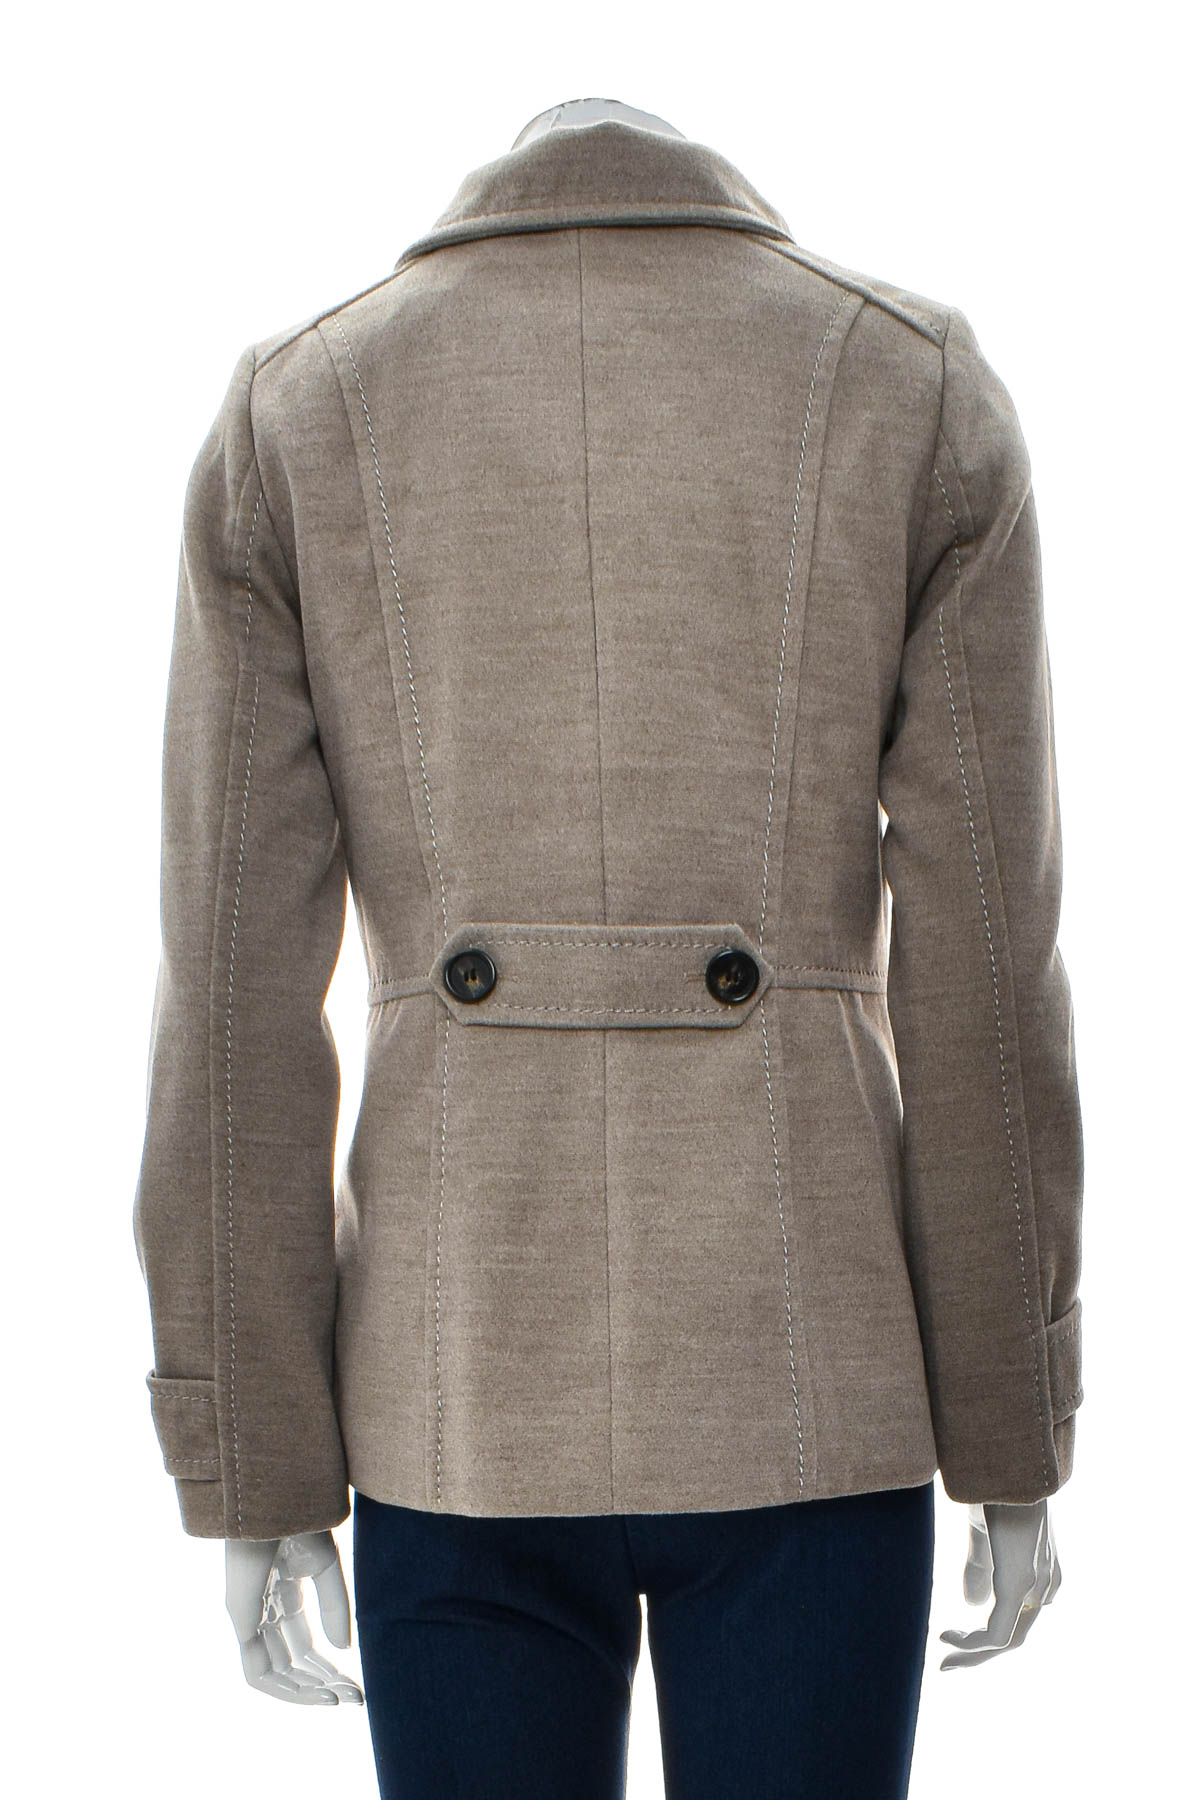 Women's coat - H&M - 1